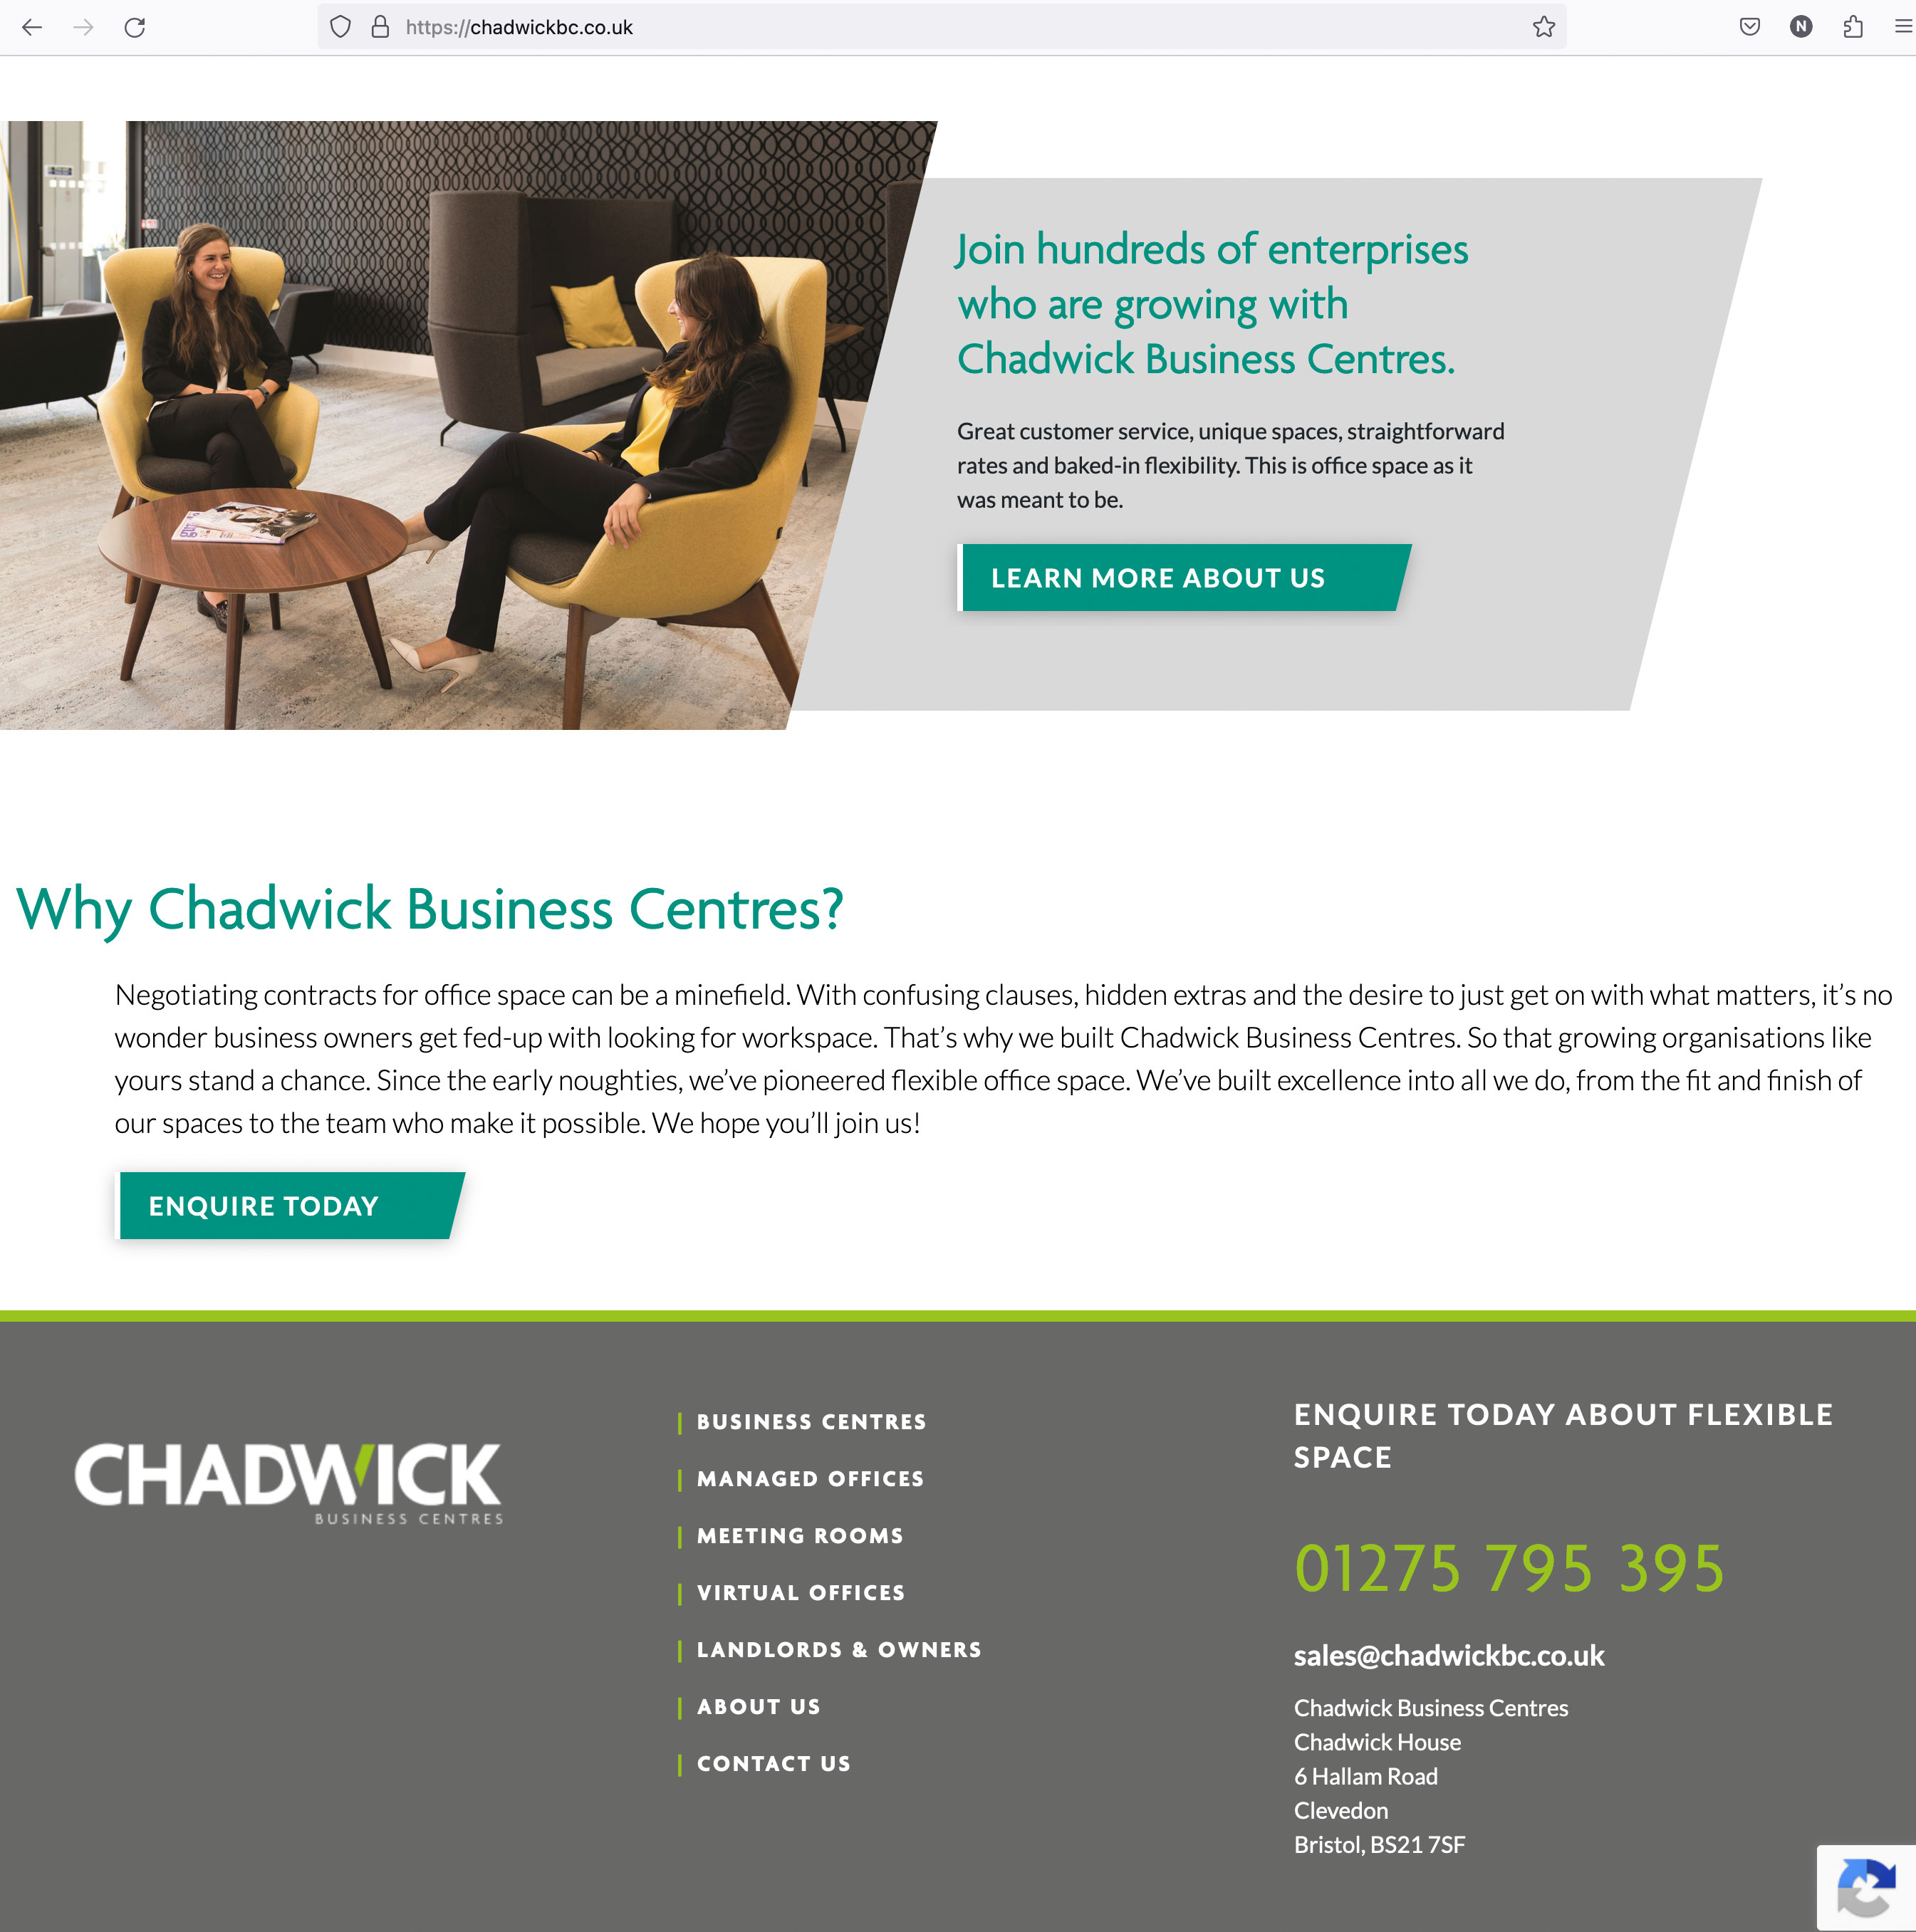 Chadwickbc-3.jpg